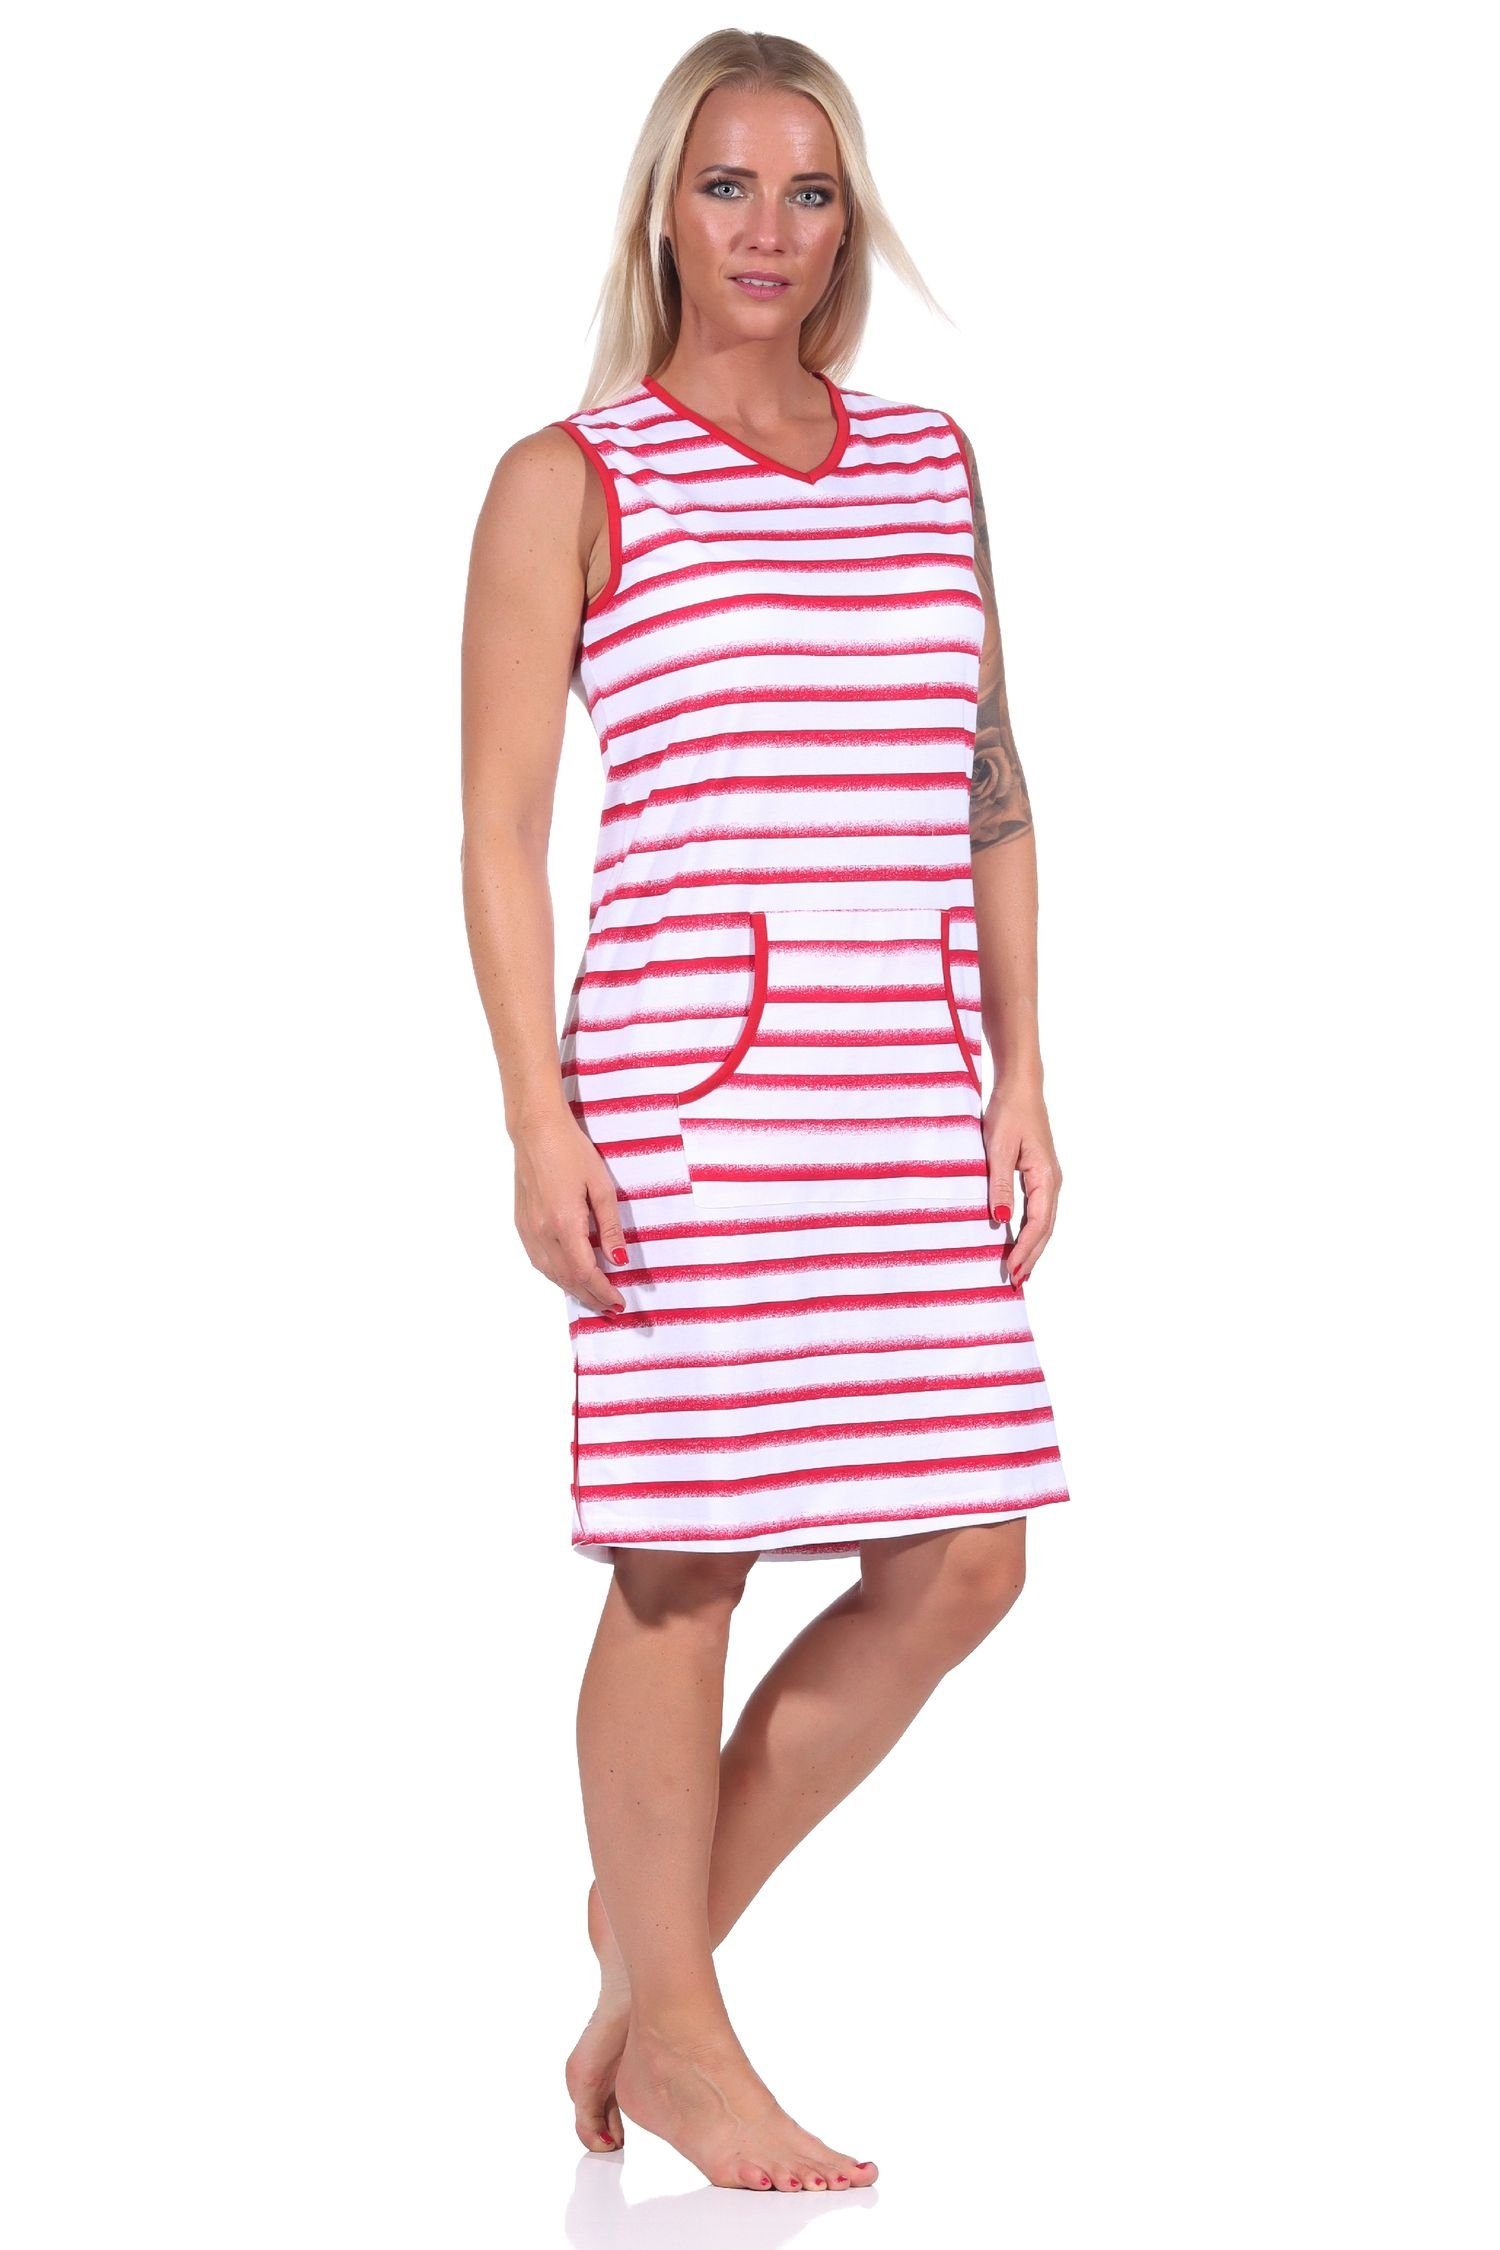 Normann Nachthemd Damen rot Streifenoptik Achselträger Nachthemd maritimer in Strandkleid